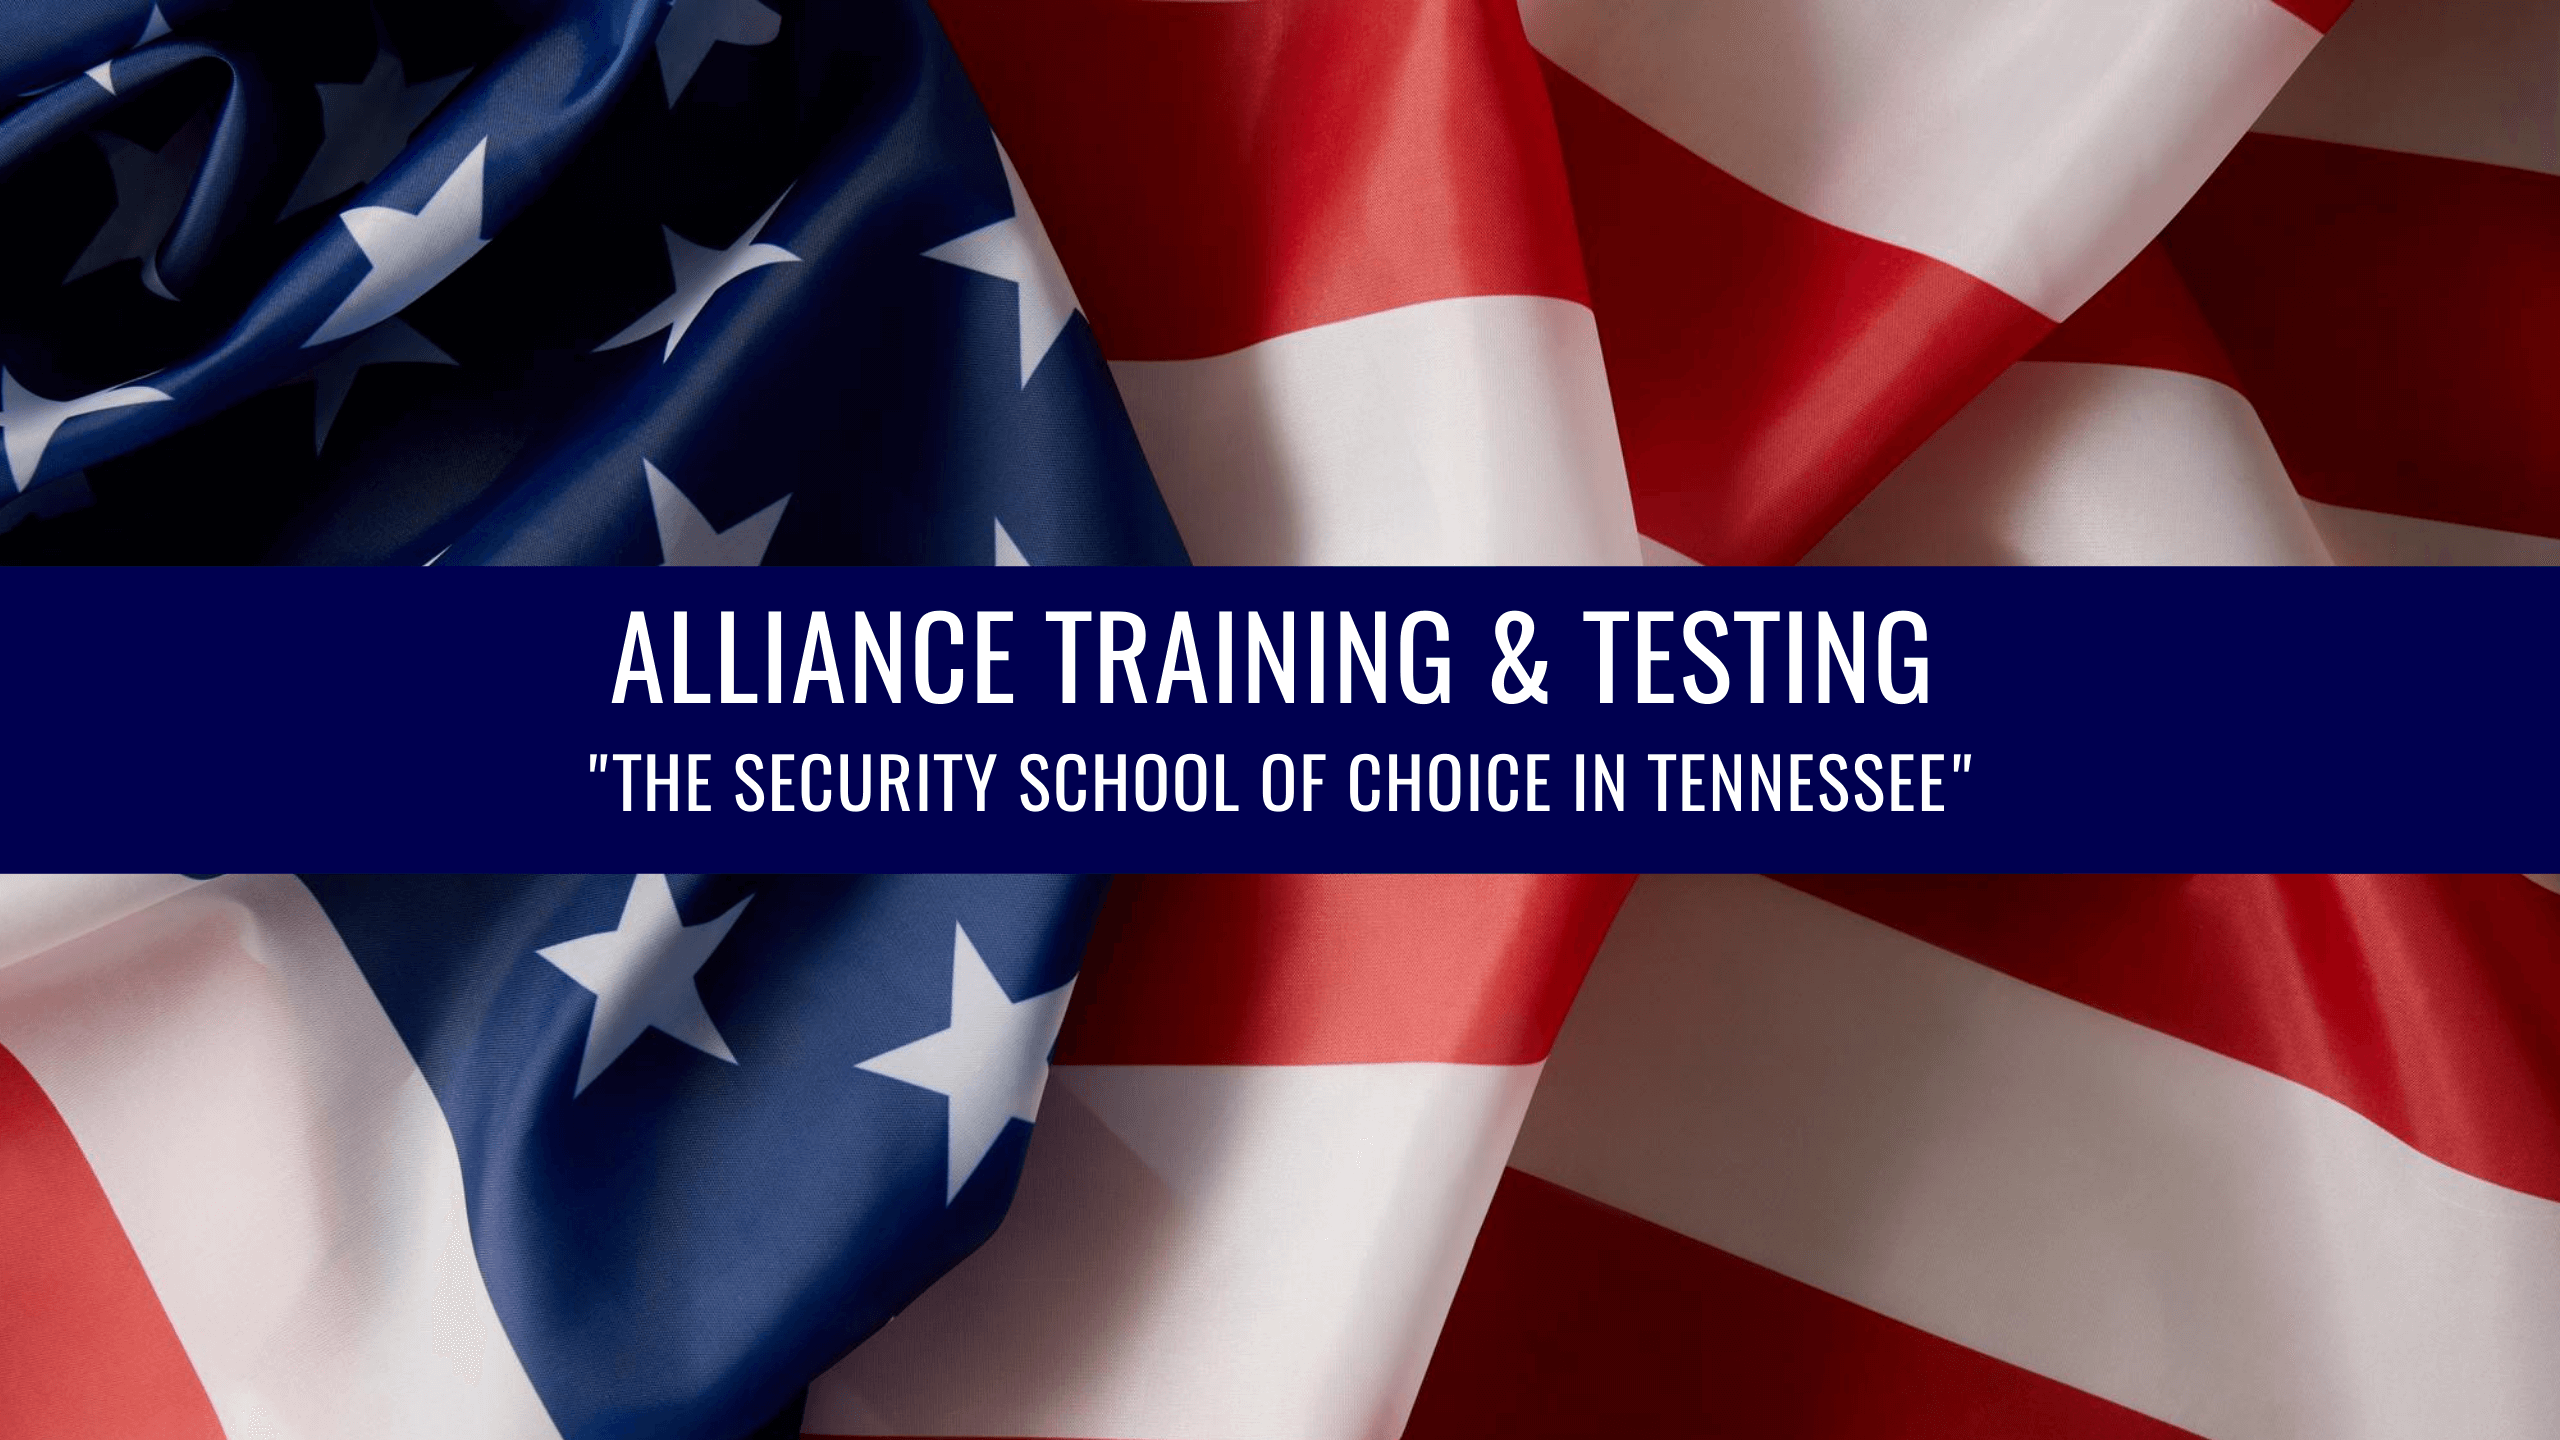 5 Star Security License Training In Nashville TN Alliance Training and Testing GuardTrainingTN The S